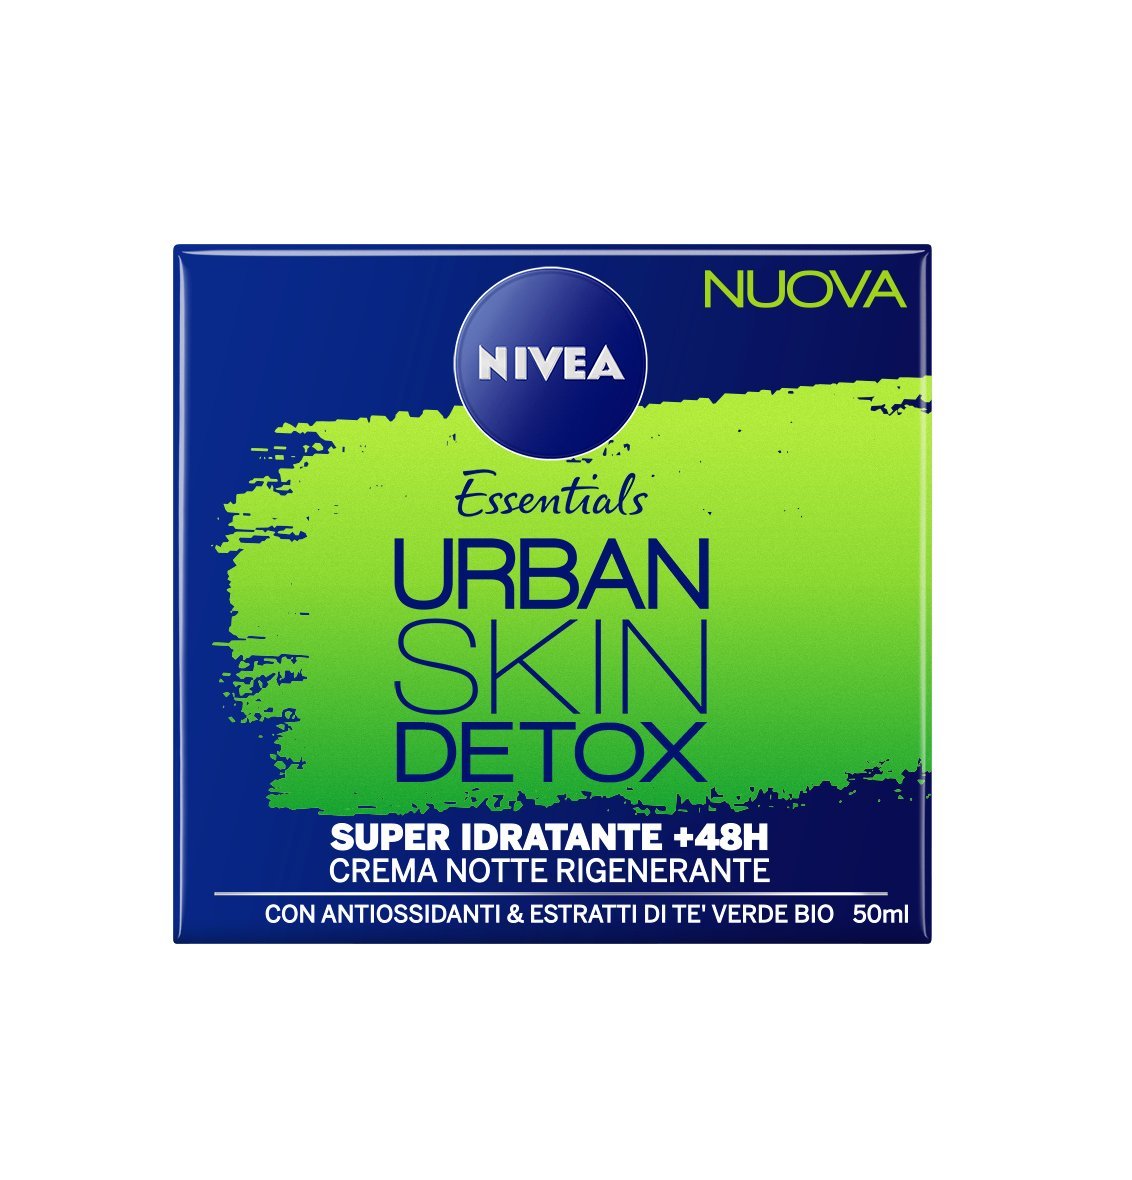 Nivea Essentials Urban Skin Detox Super Idratante +48H Crema Notte Rigenerante 50 ml